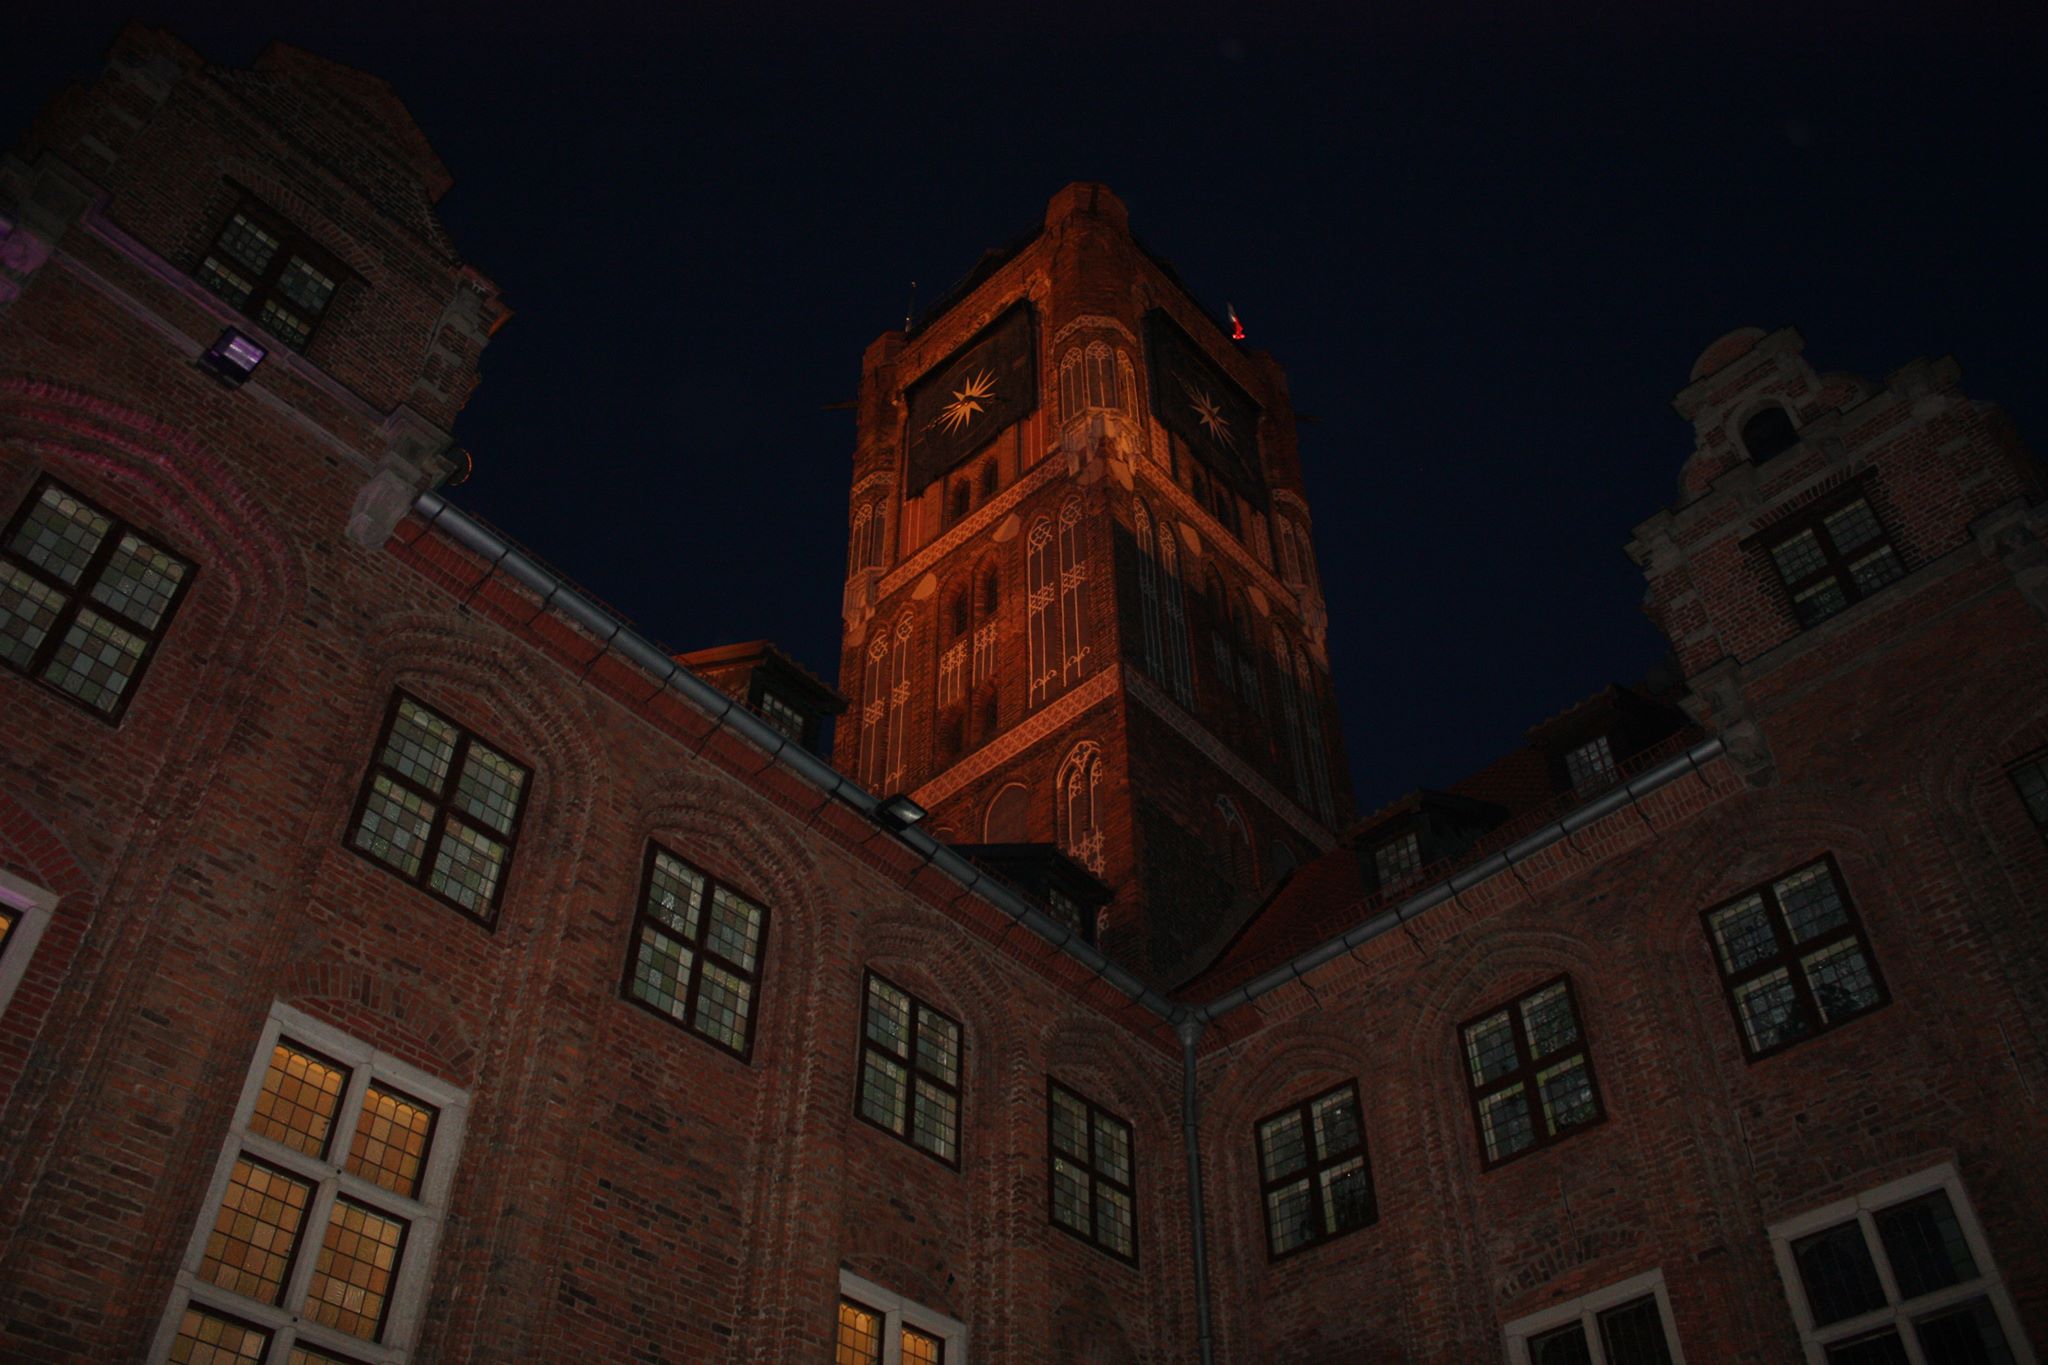 Wieża nocą, fot. h.smolarek